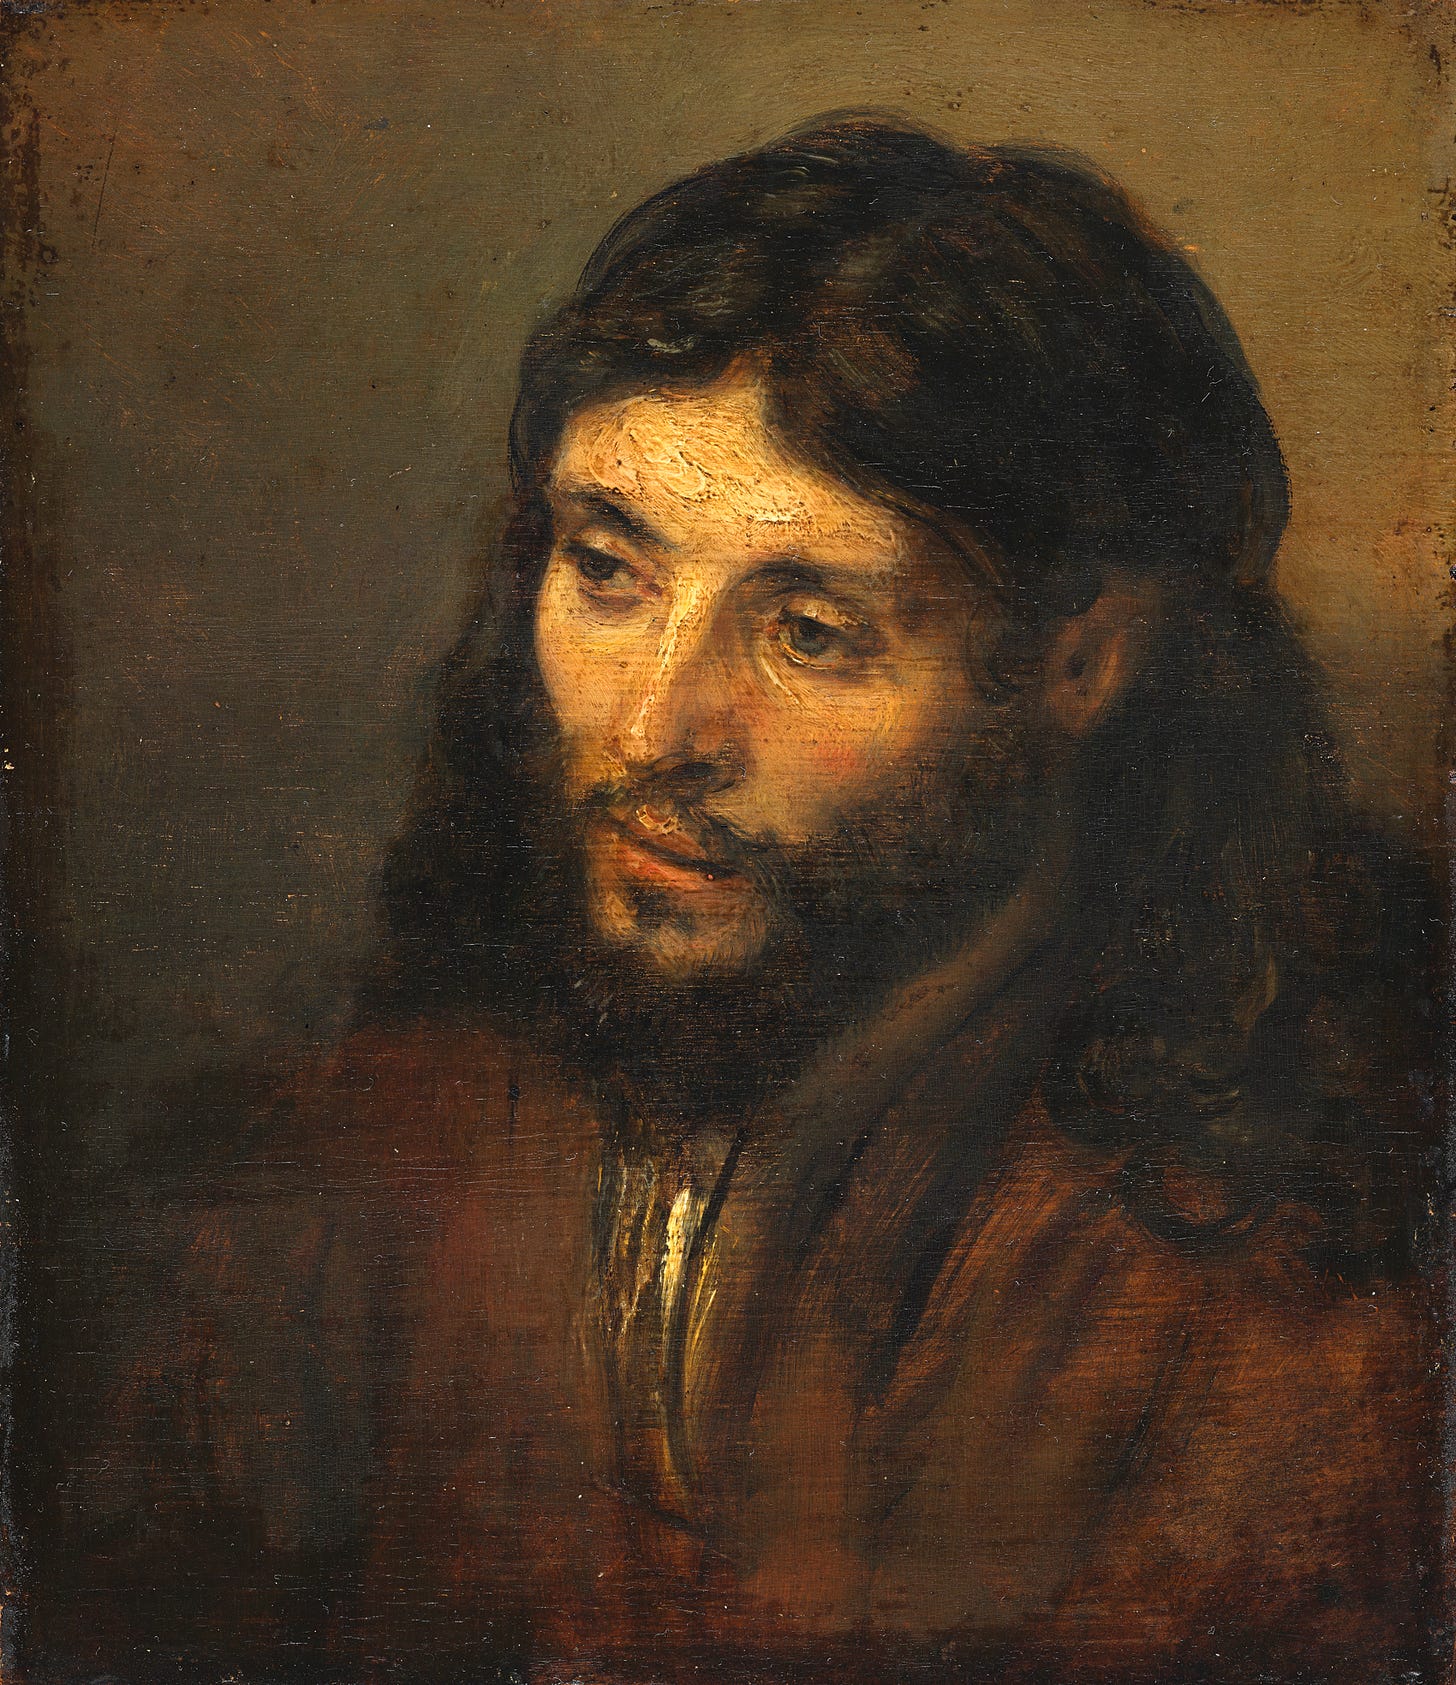 Head of Christ (Rembrandt) - Wikipedia